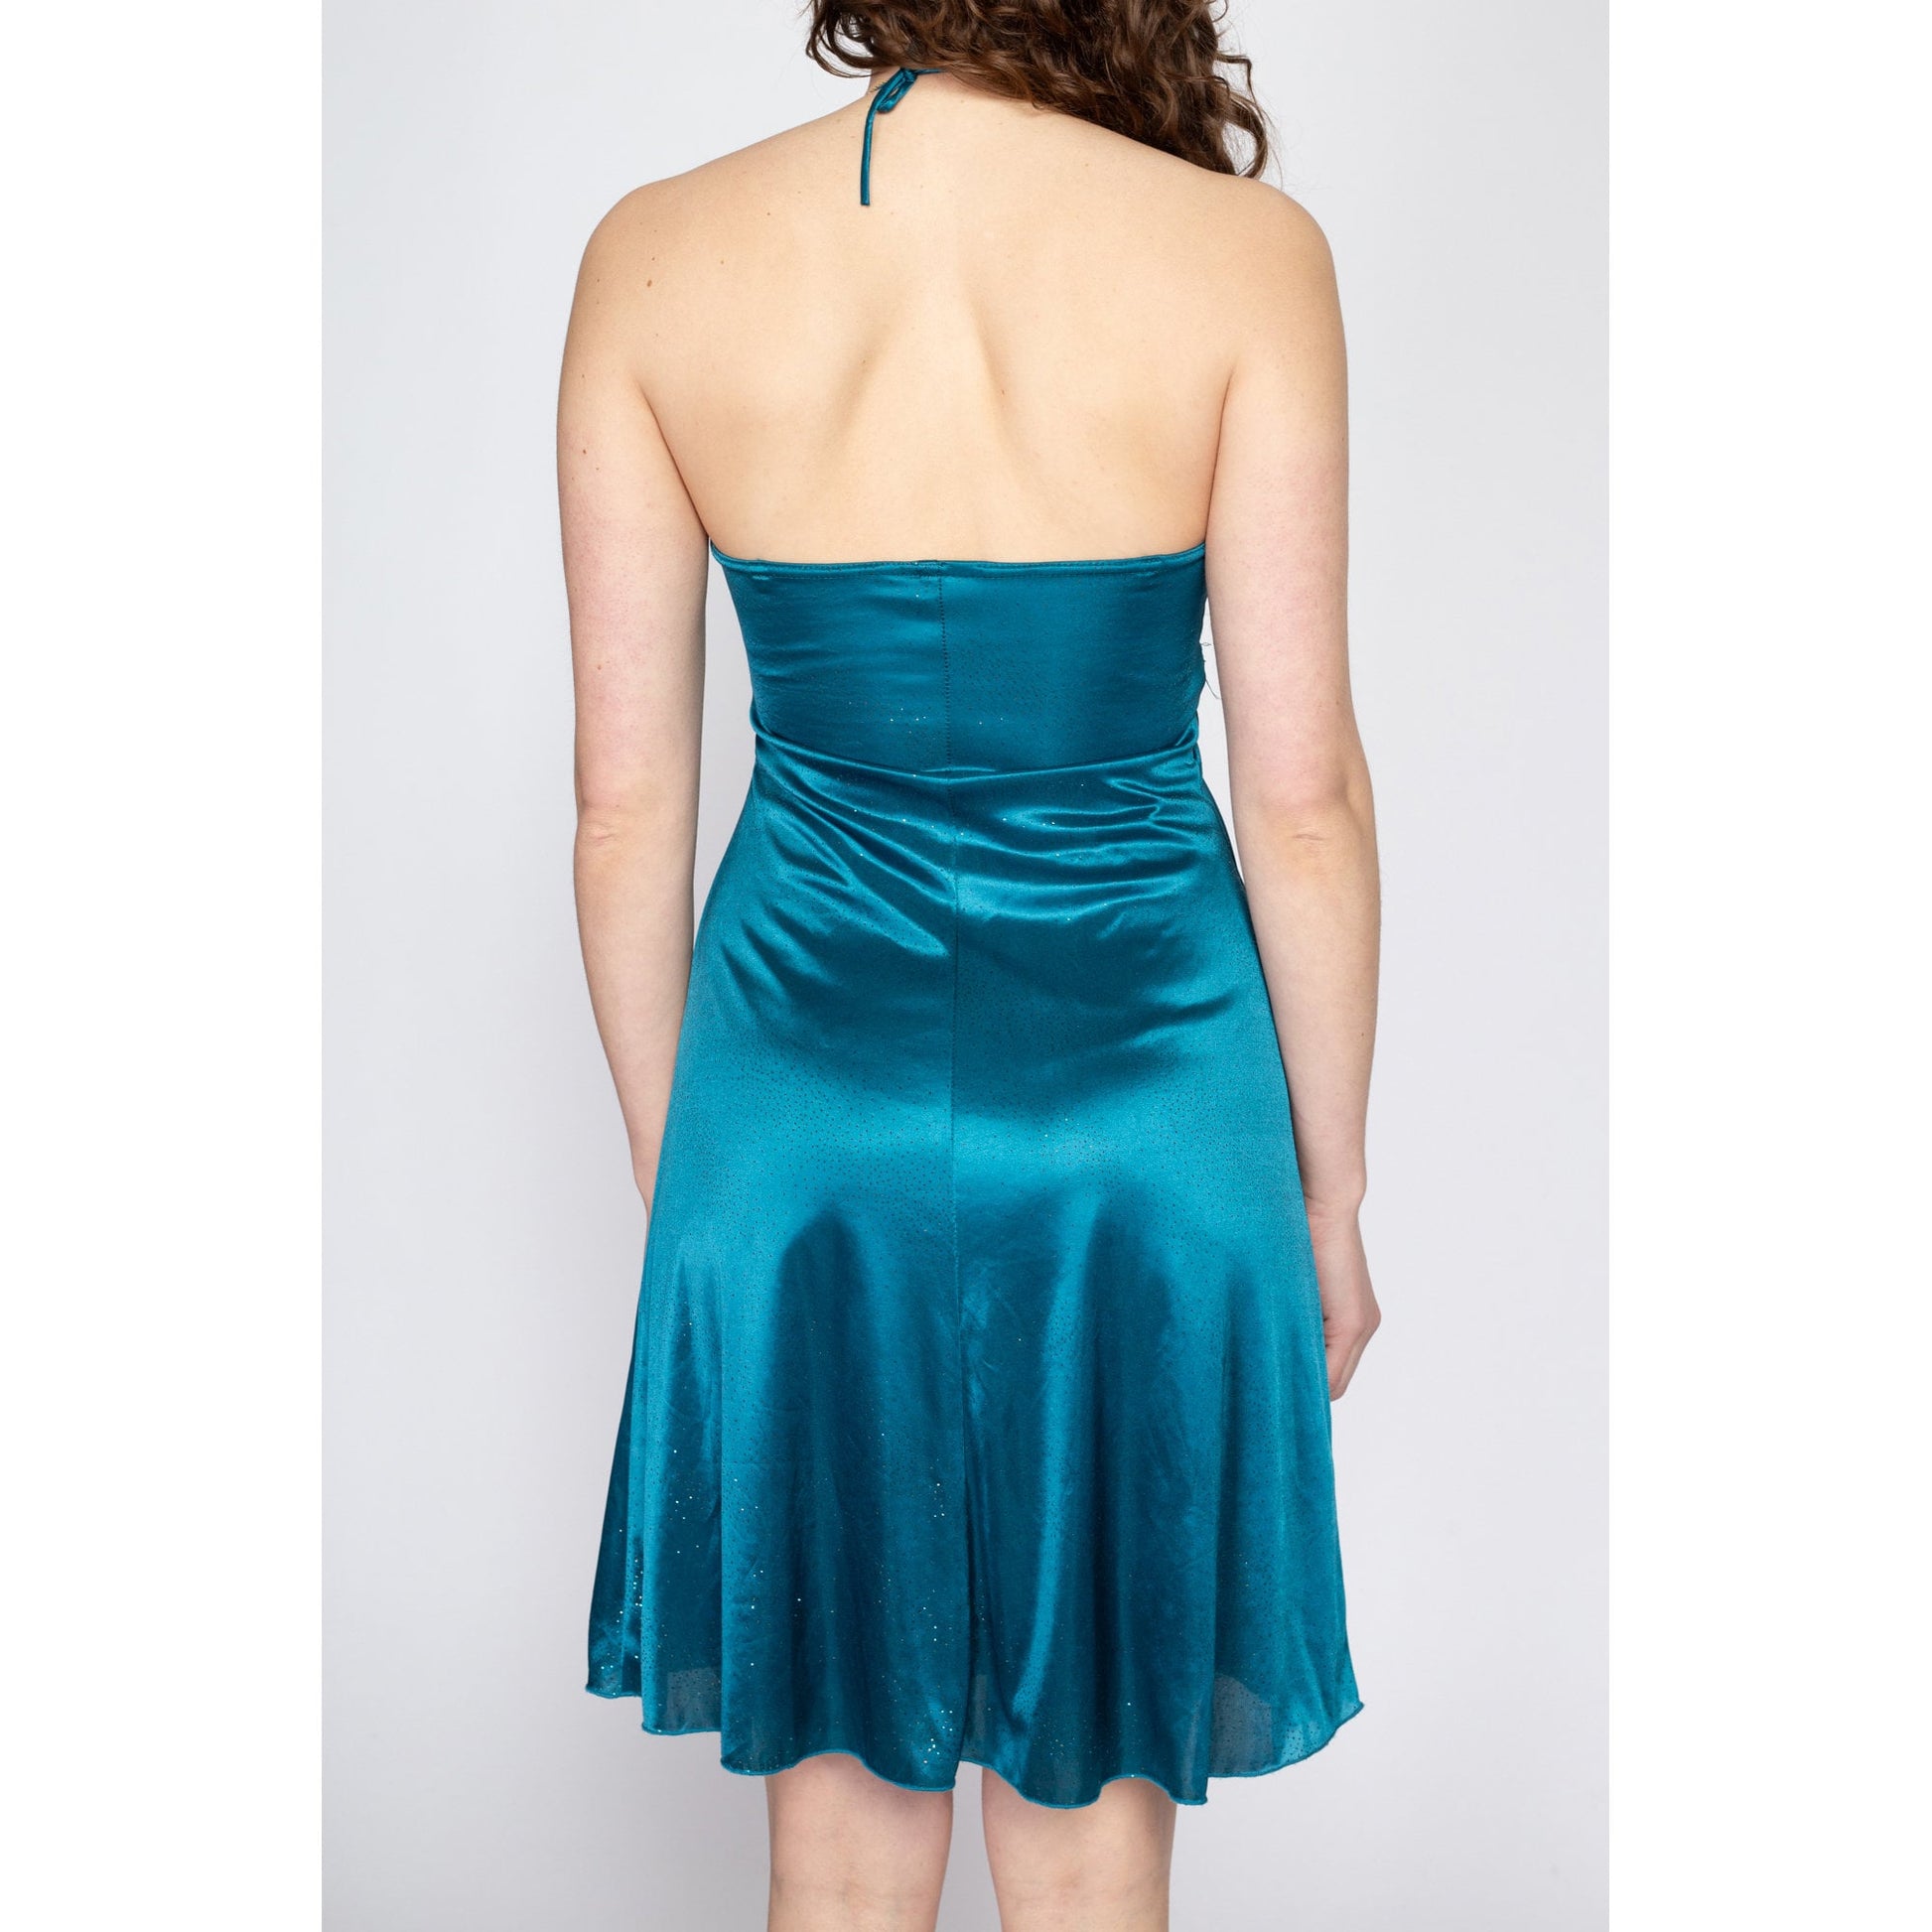 Sm-Med Y2K Shiny Teal Blue Halter Party Dress | Vintage Sleeveless Empire Waist Mini Dress